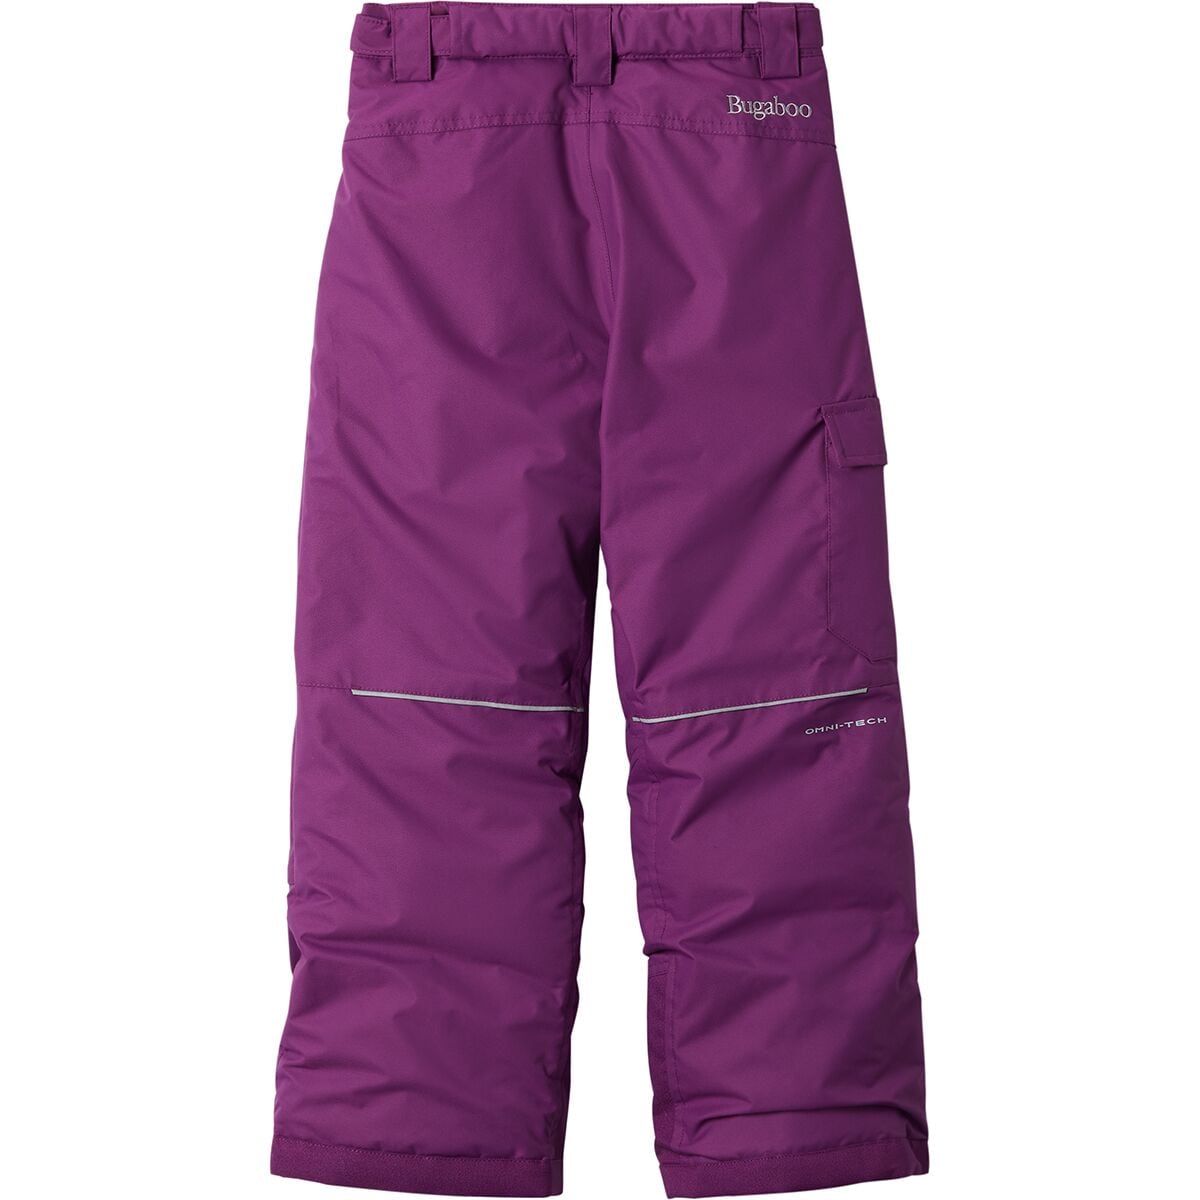 Columbia Bugaboo II Pant Unisex Kids Ski Trousers : Amazon.co.uk: Fashion